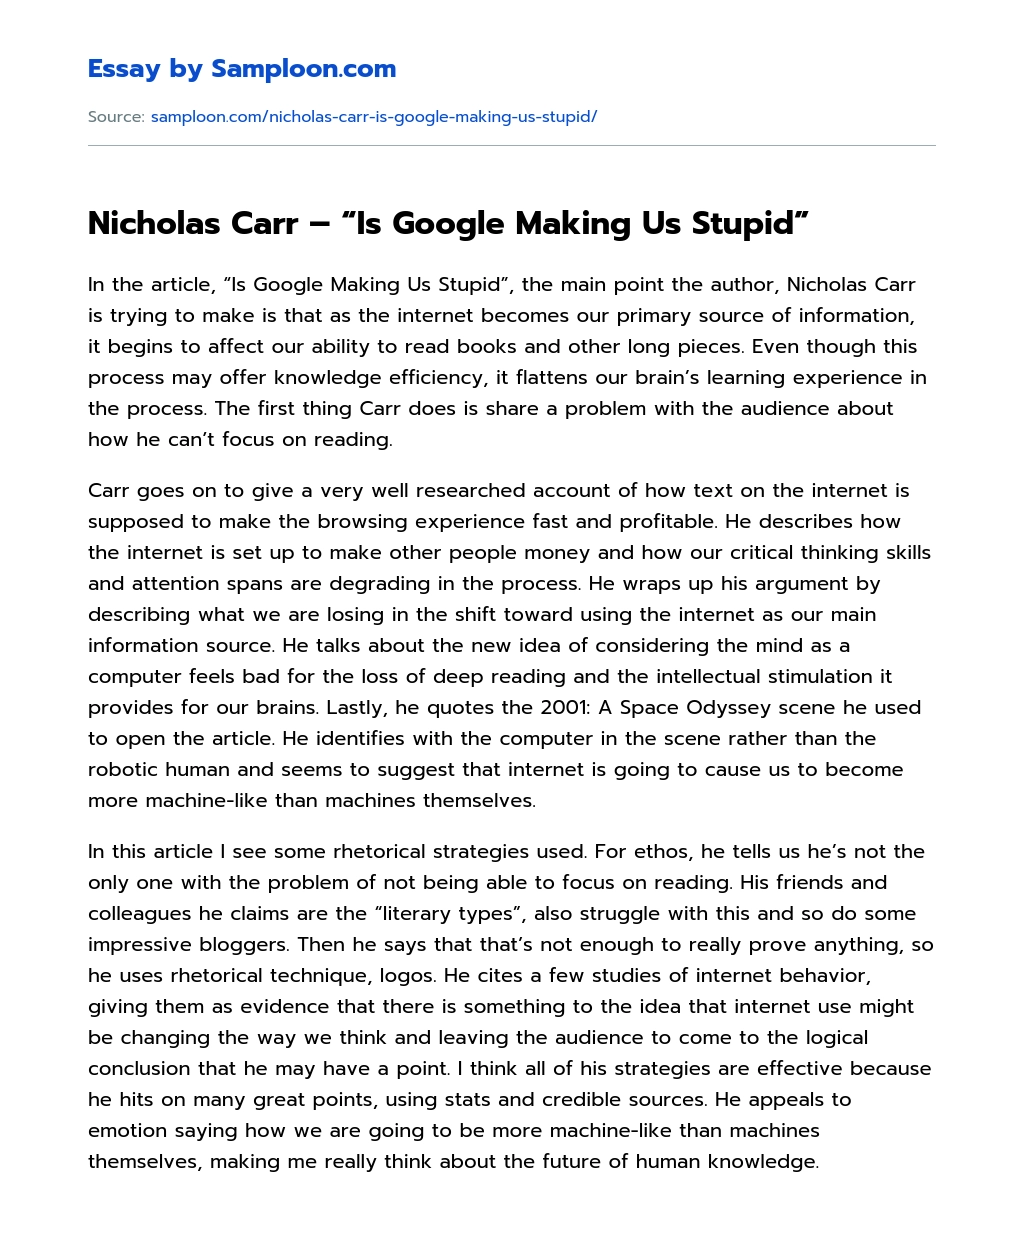 Nicholas Carr – “Is Google Making Us Stupid” essay